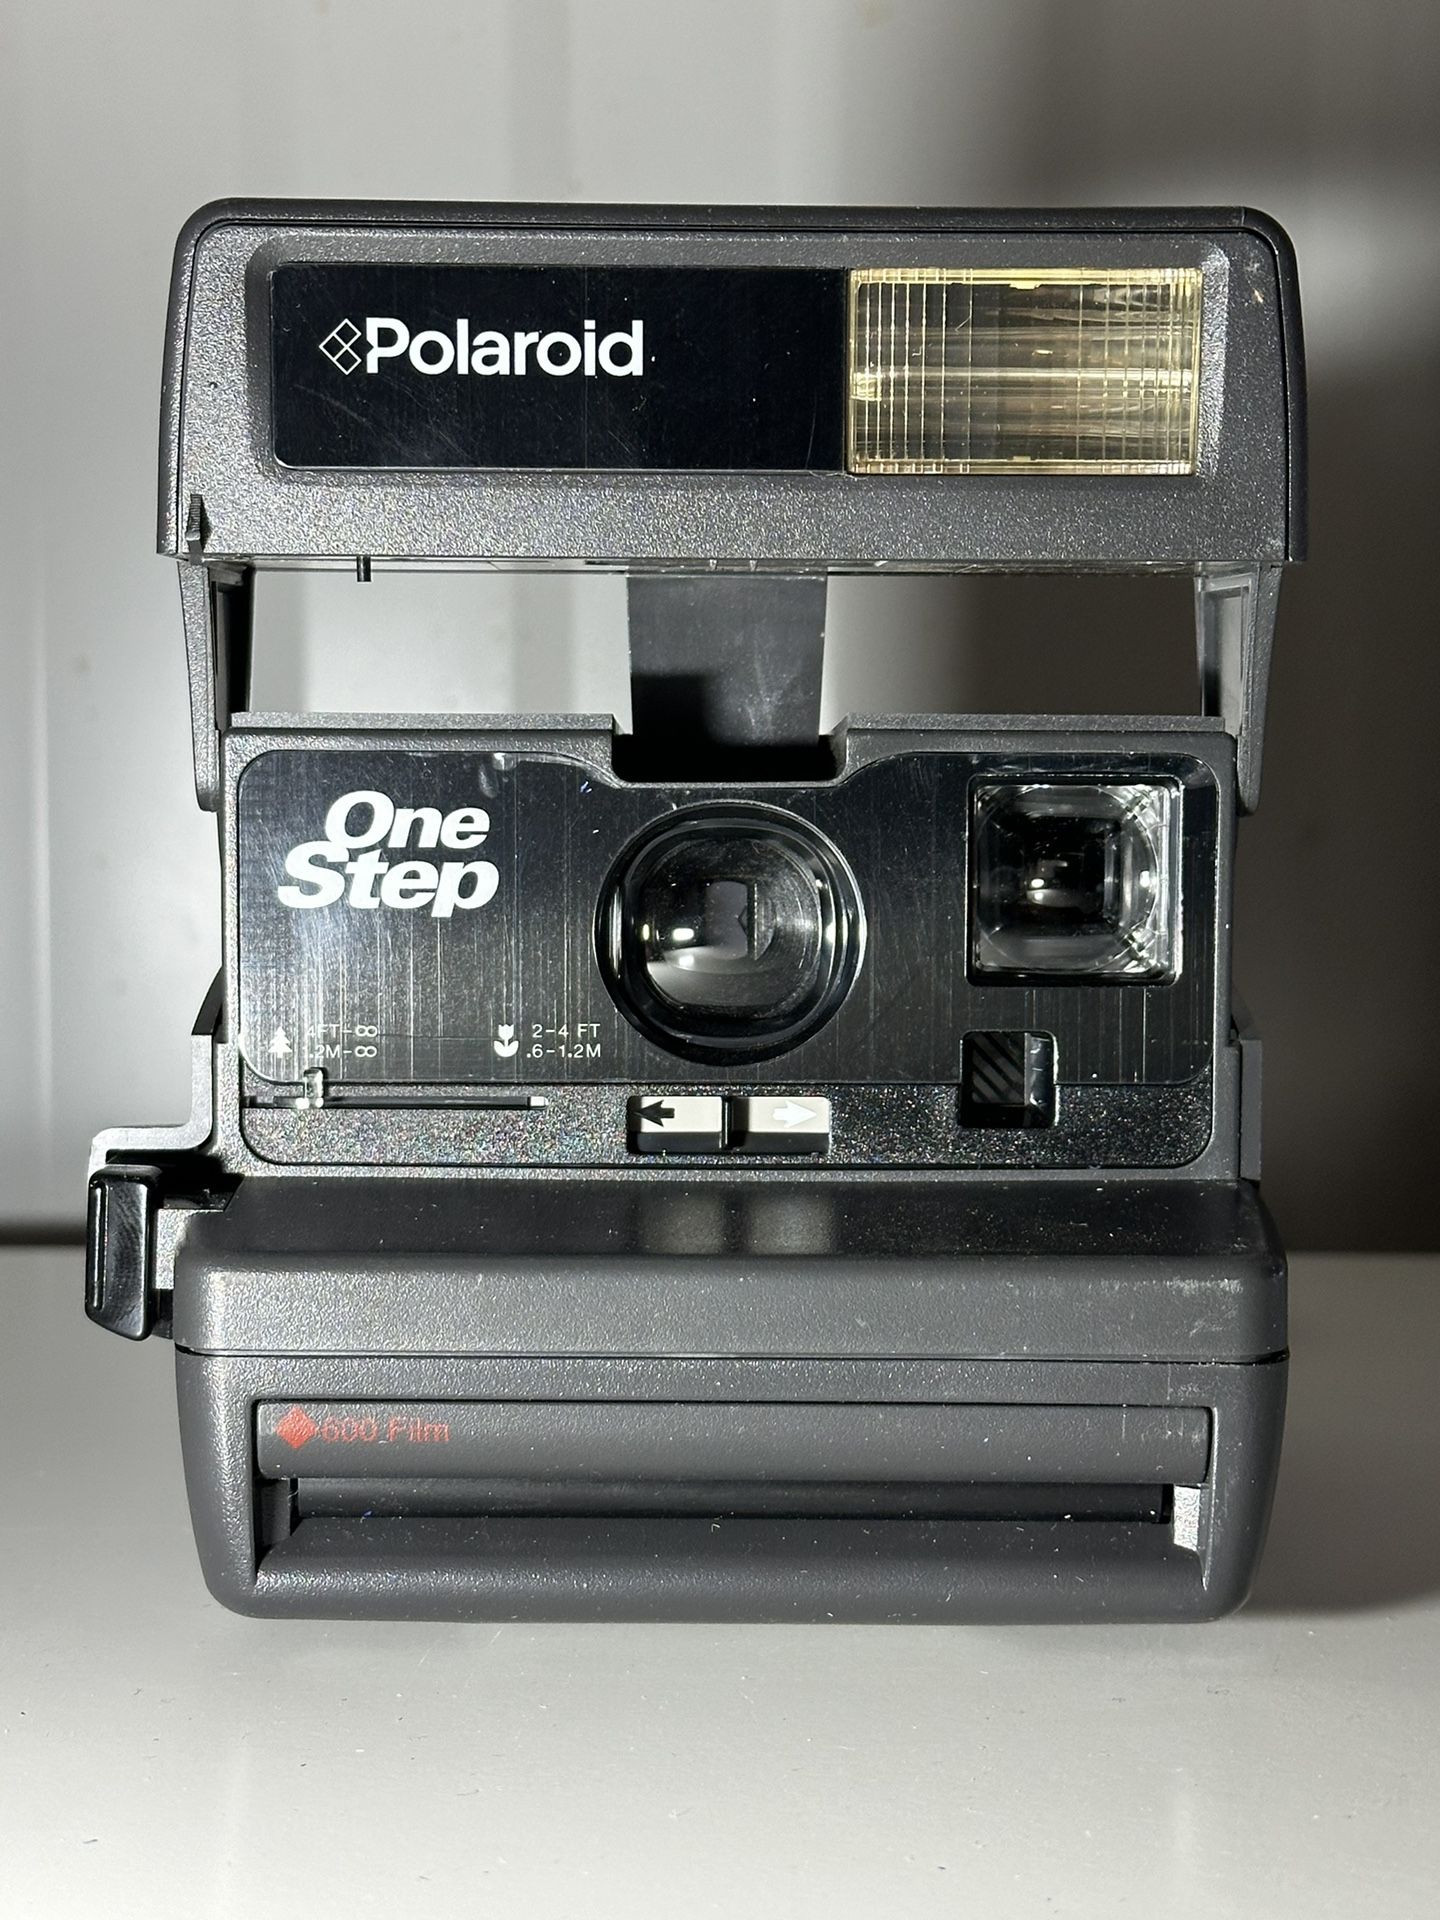 Vintage Original Polaroid OneStep 600 Instant Film Camera Excellent Condition